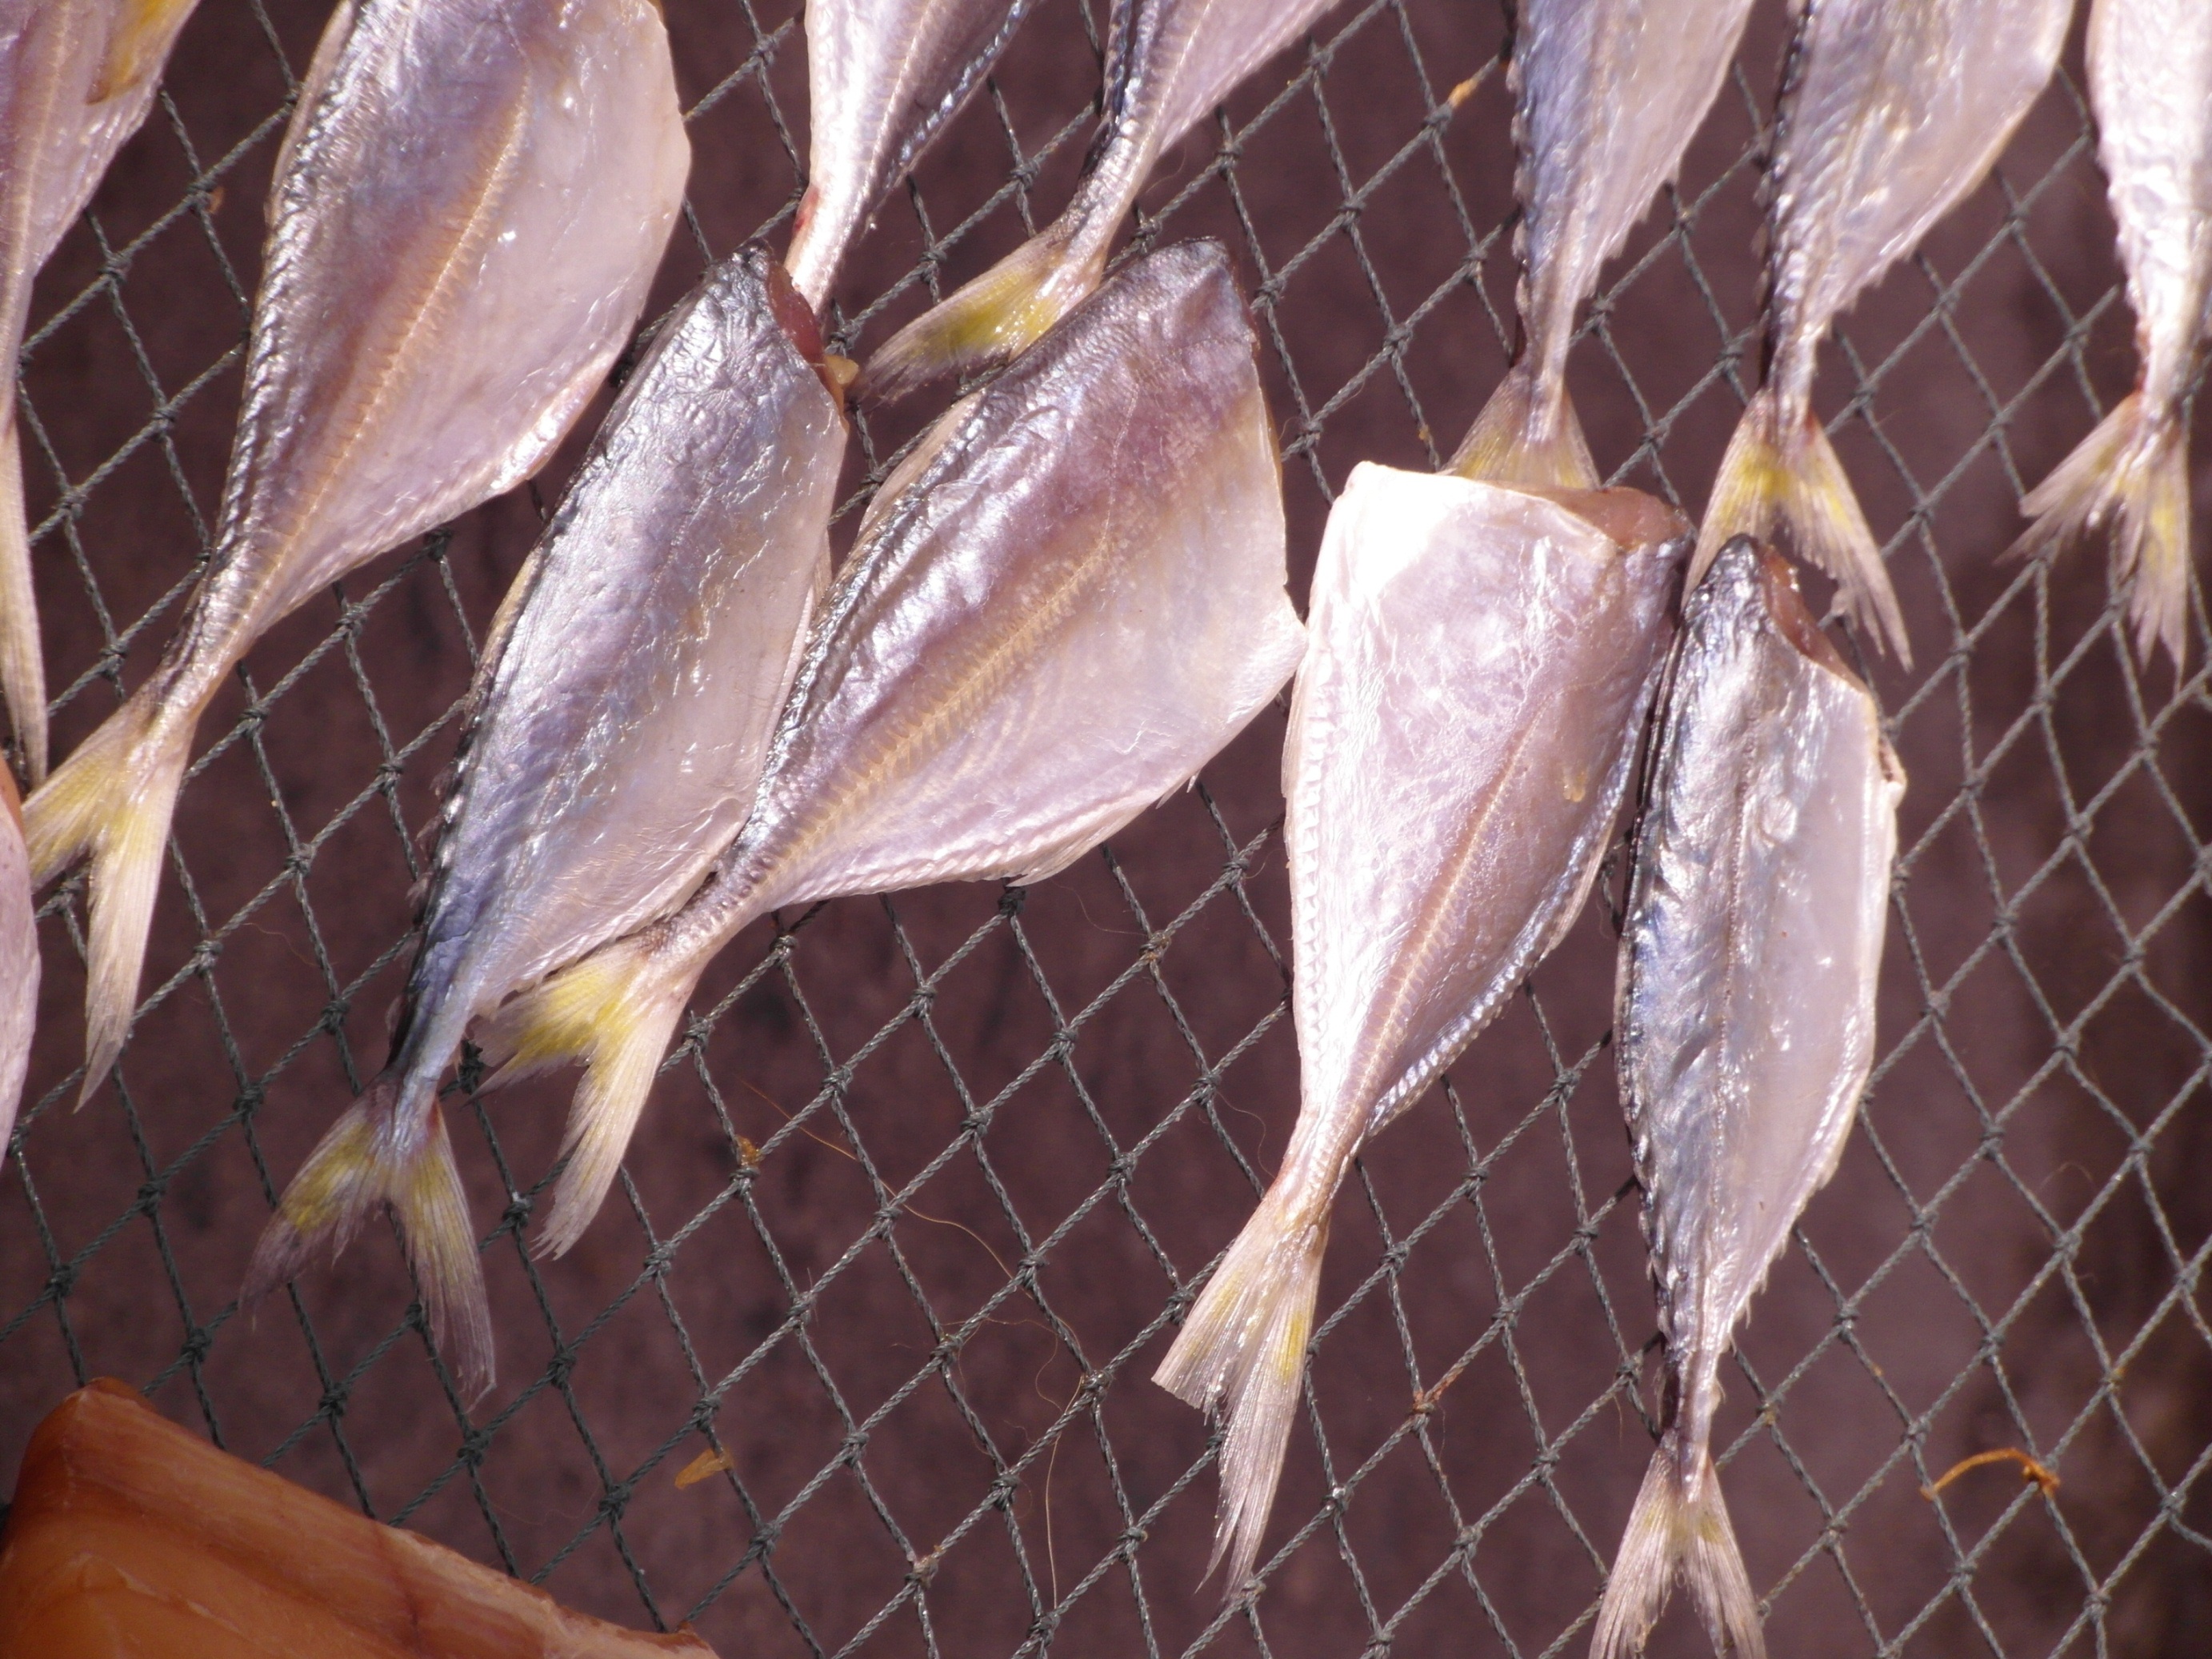 Drying fish photo